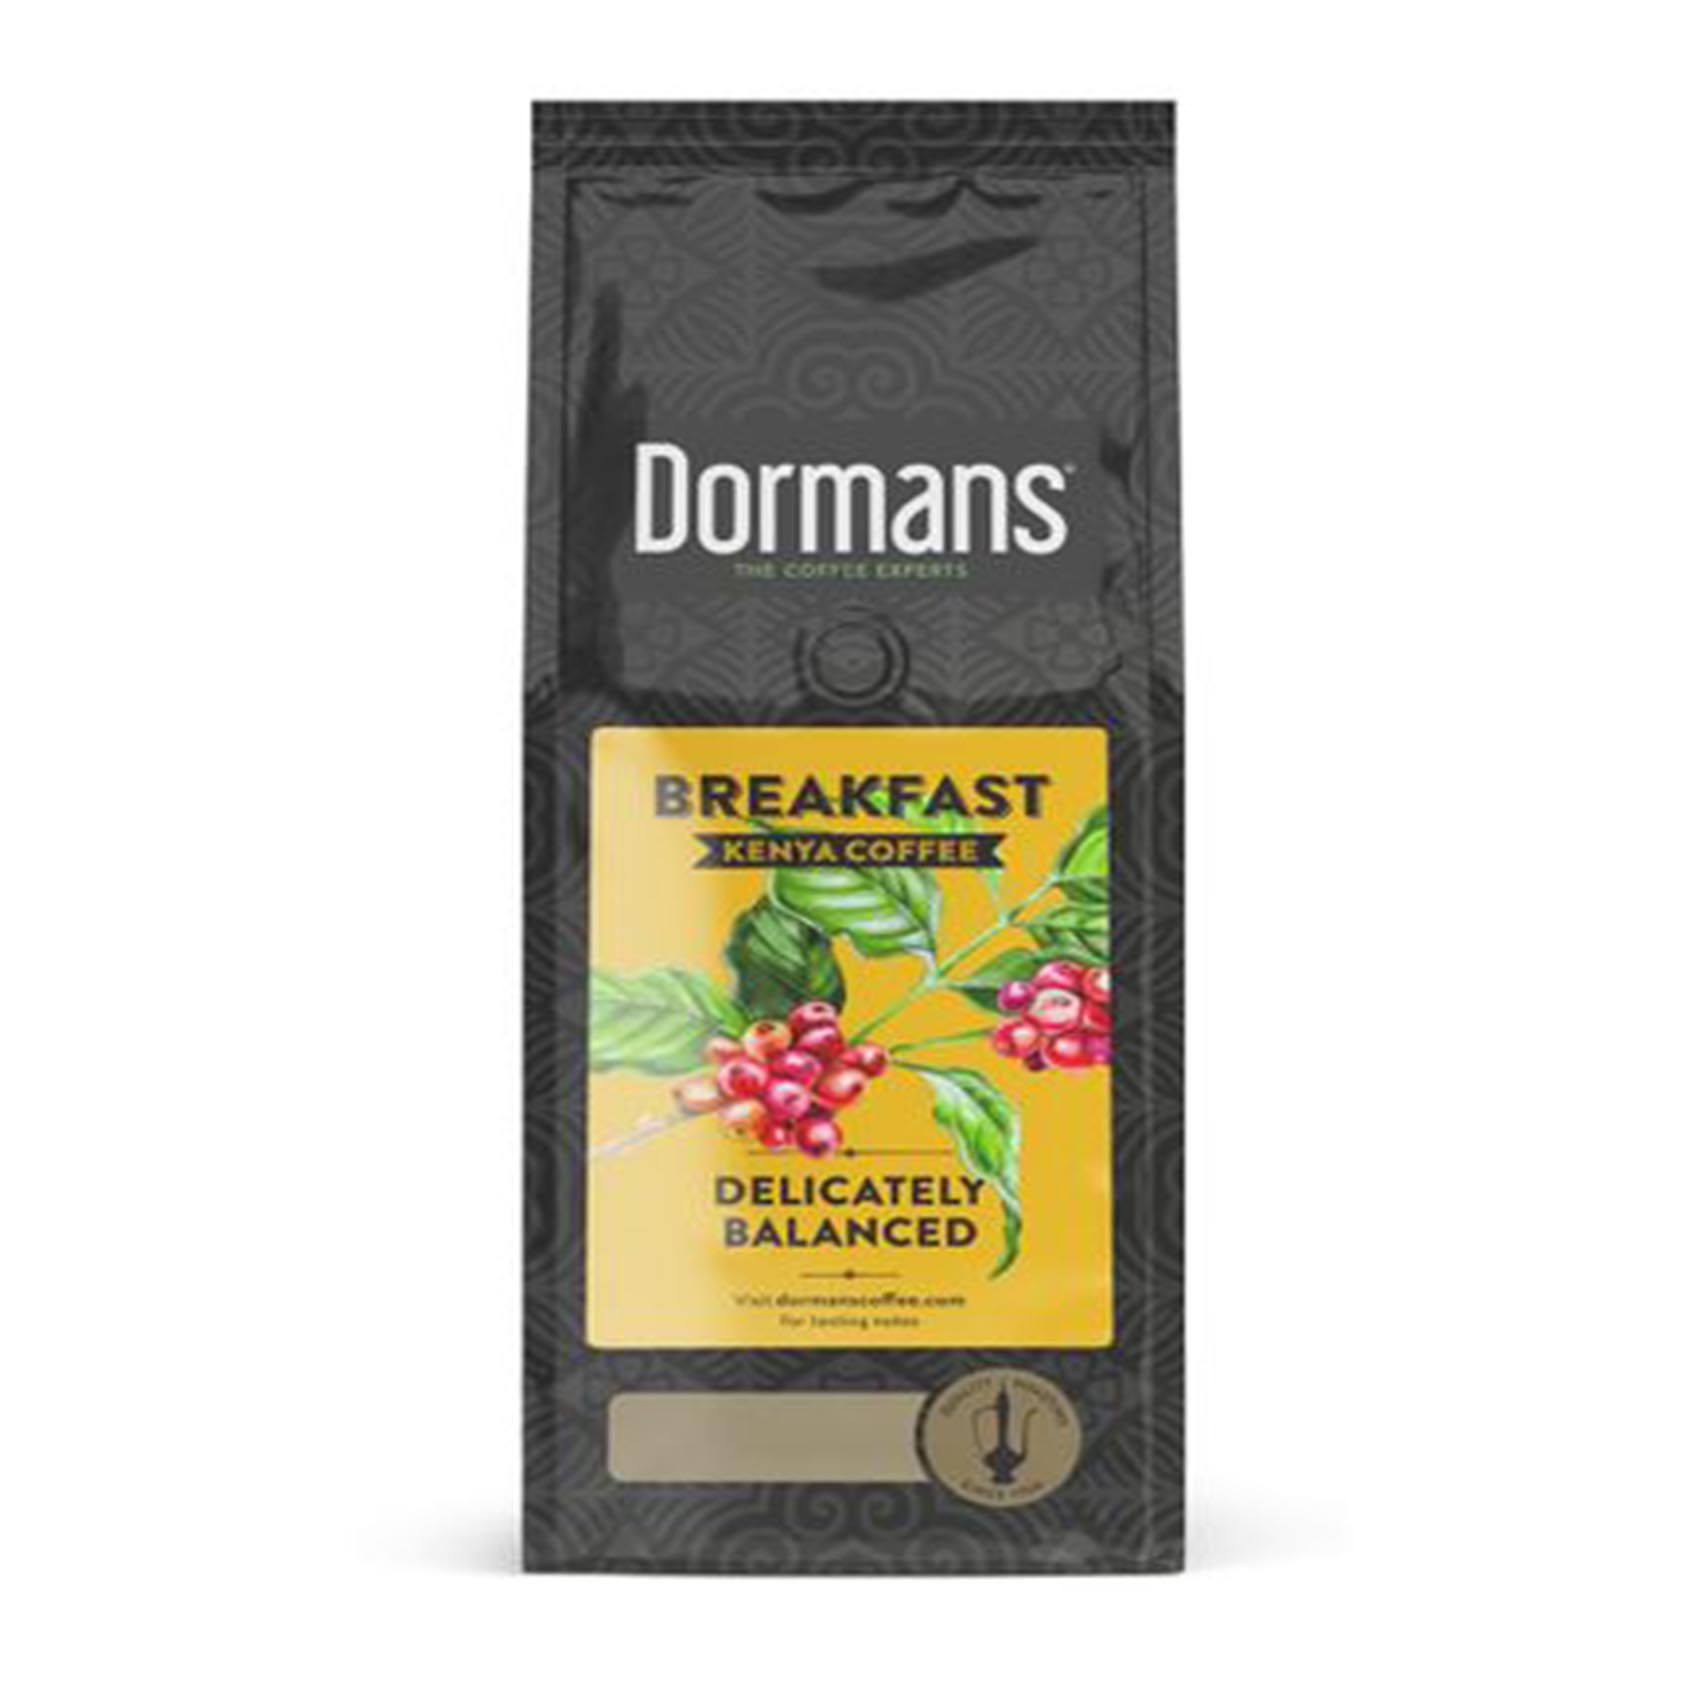 Dormans Breakfast Delicately Balanced Medium Ground Kenya Coffee 375g